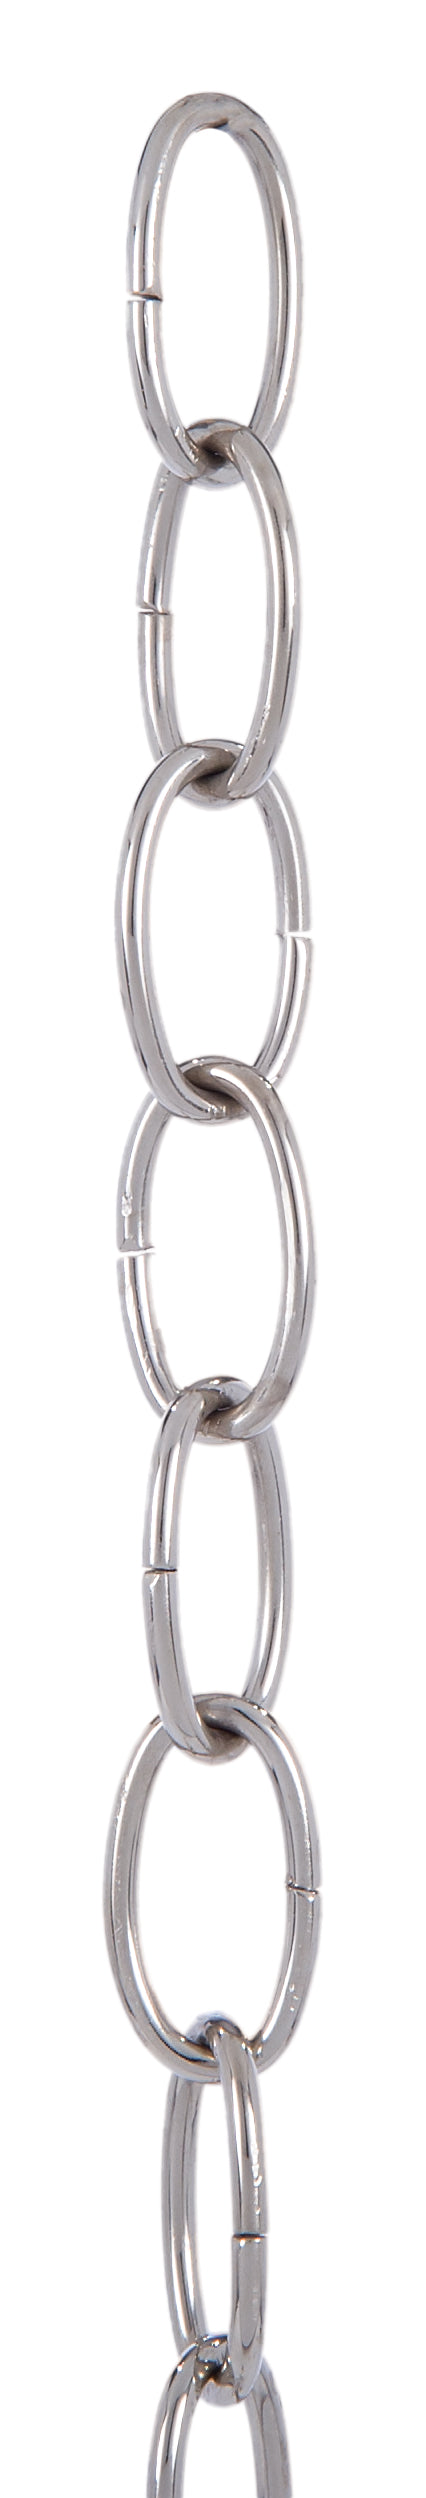 Nickel Plated Brass, Large Loop 8 Gauge Oval Chain